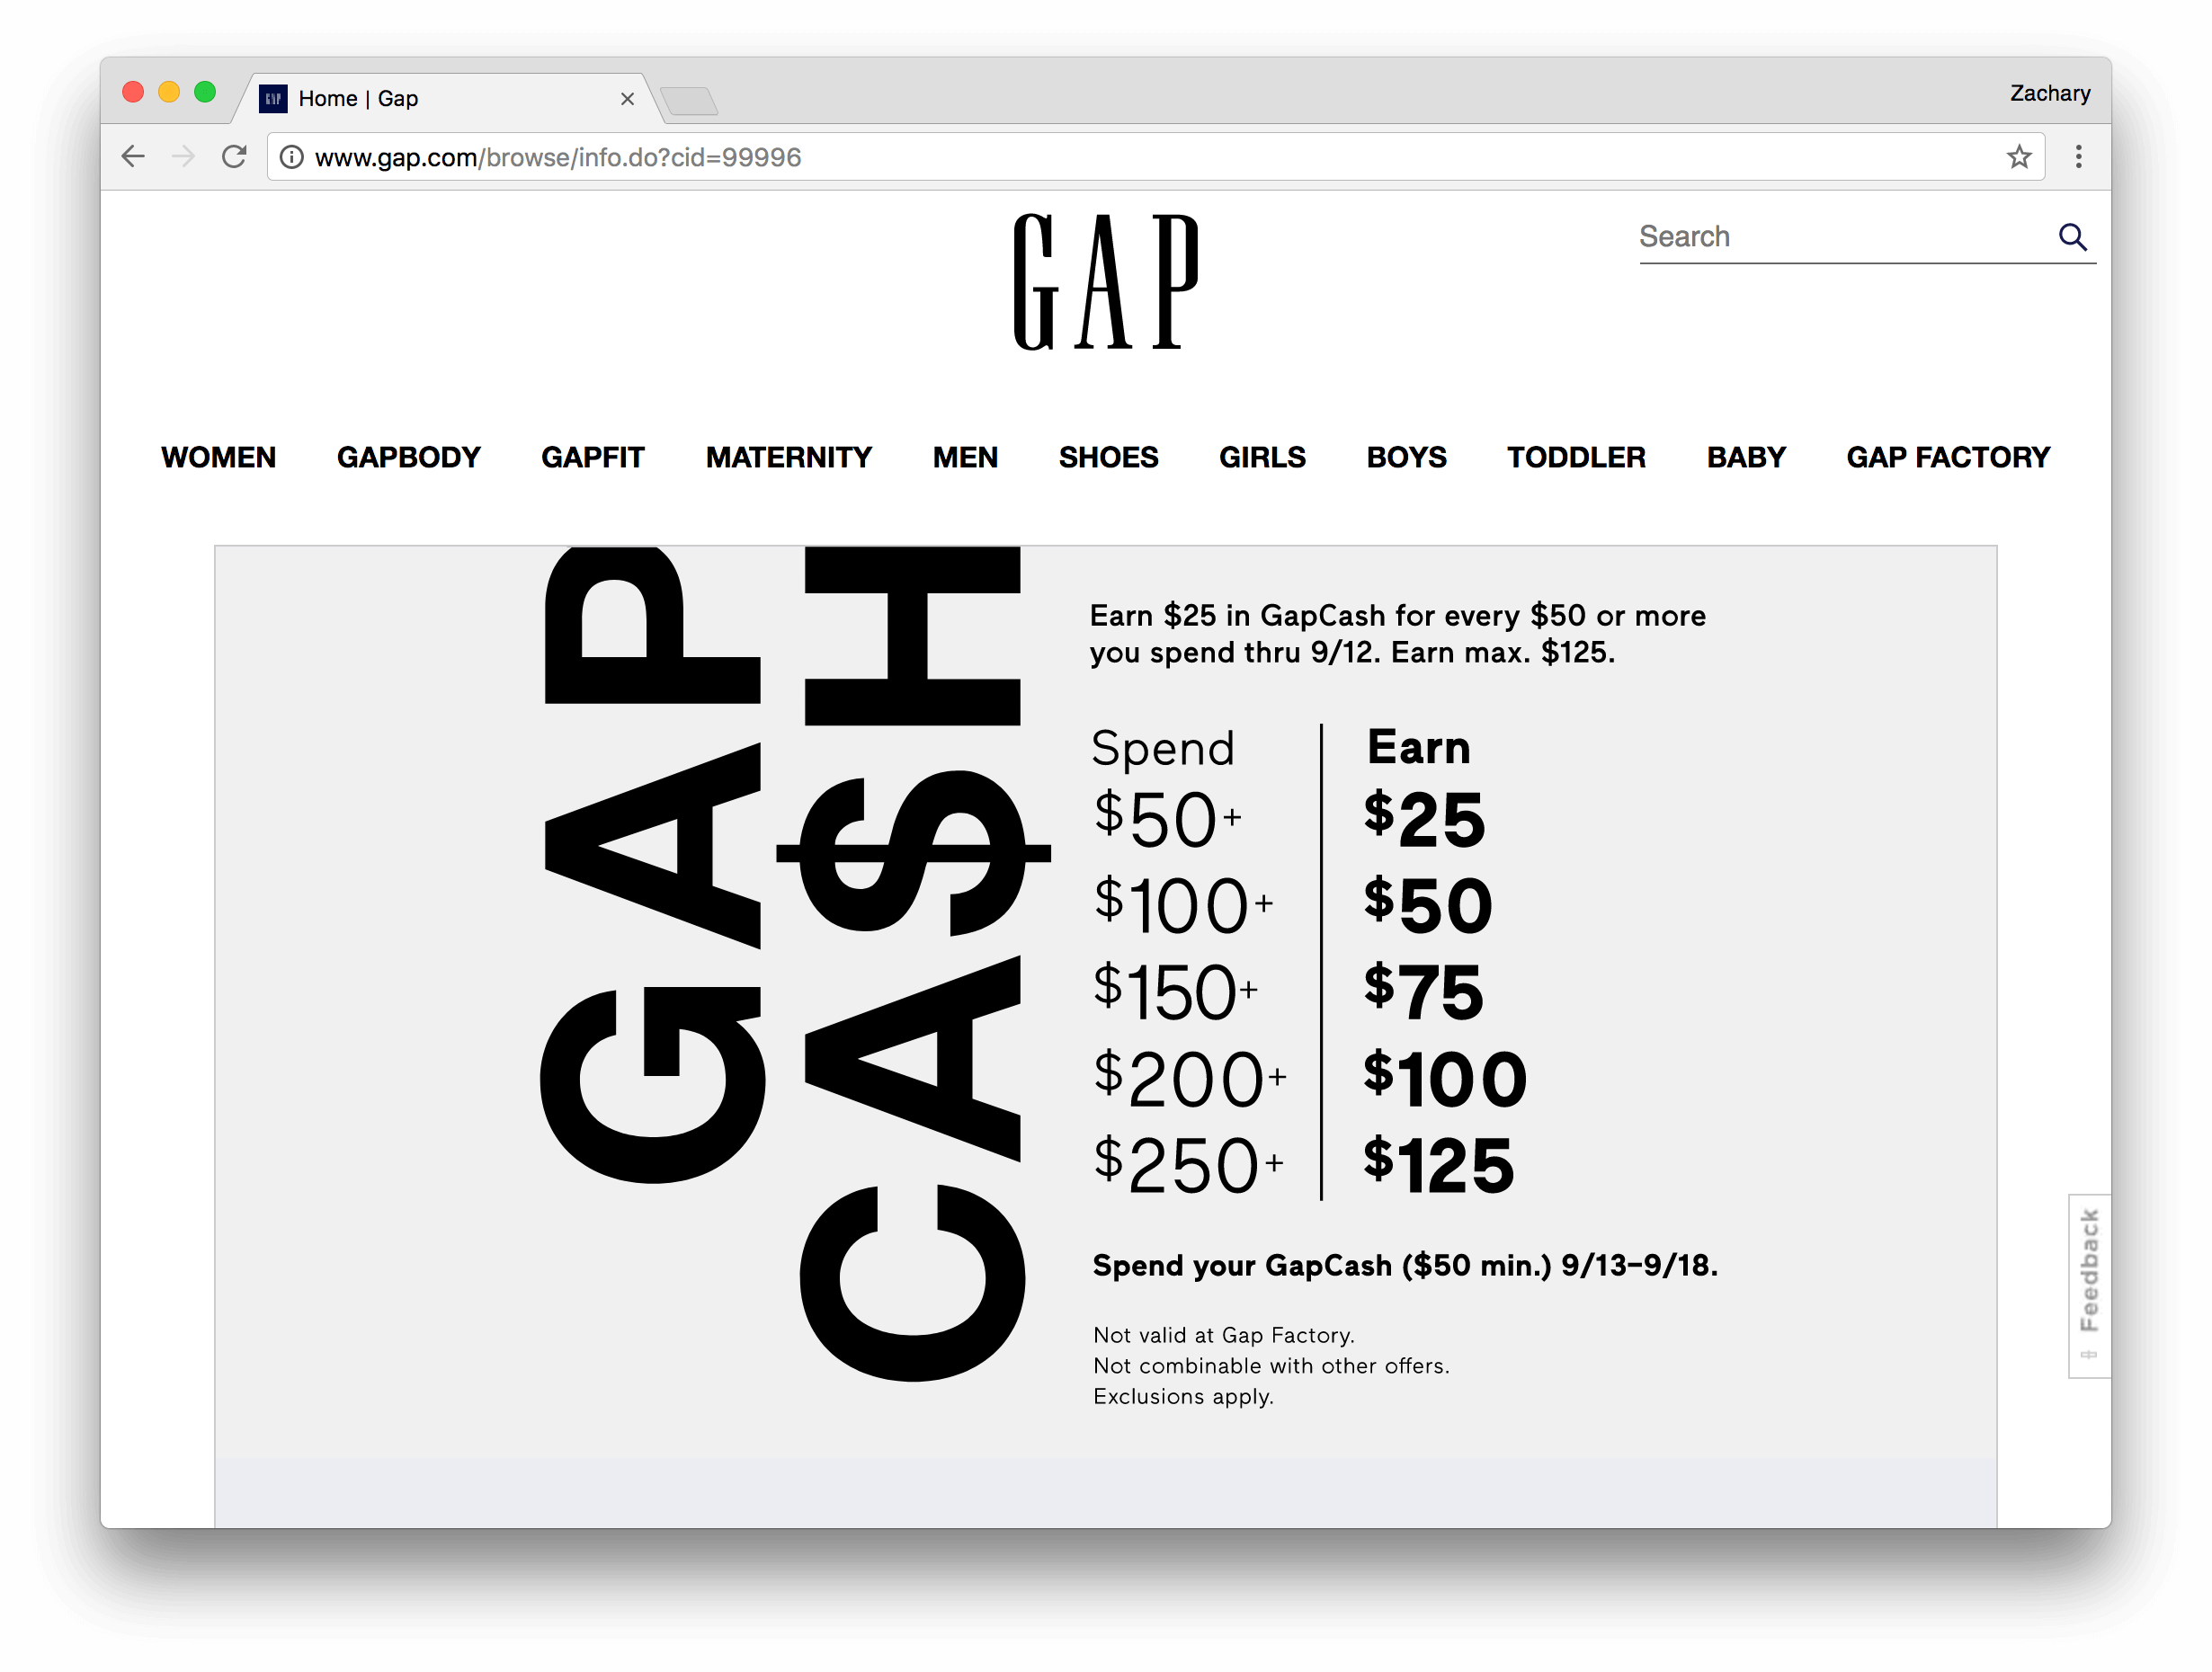 GapCash program terms